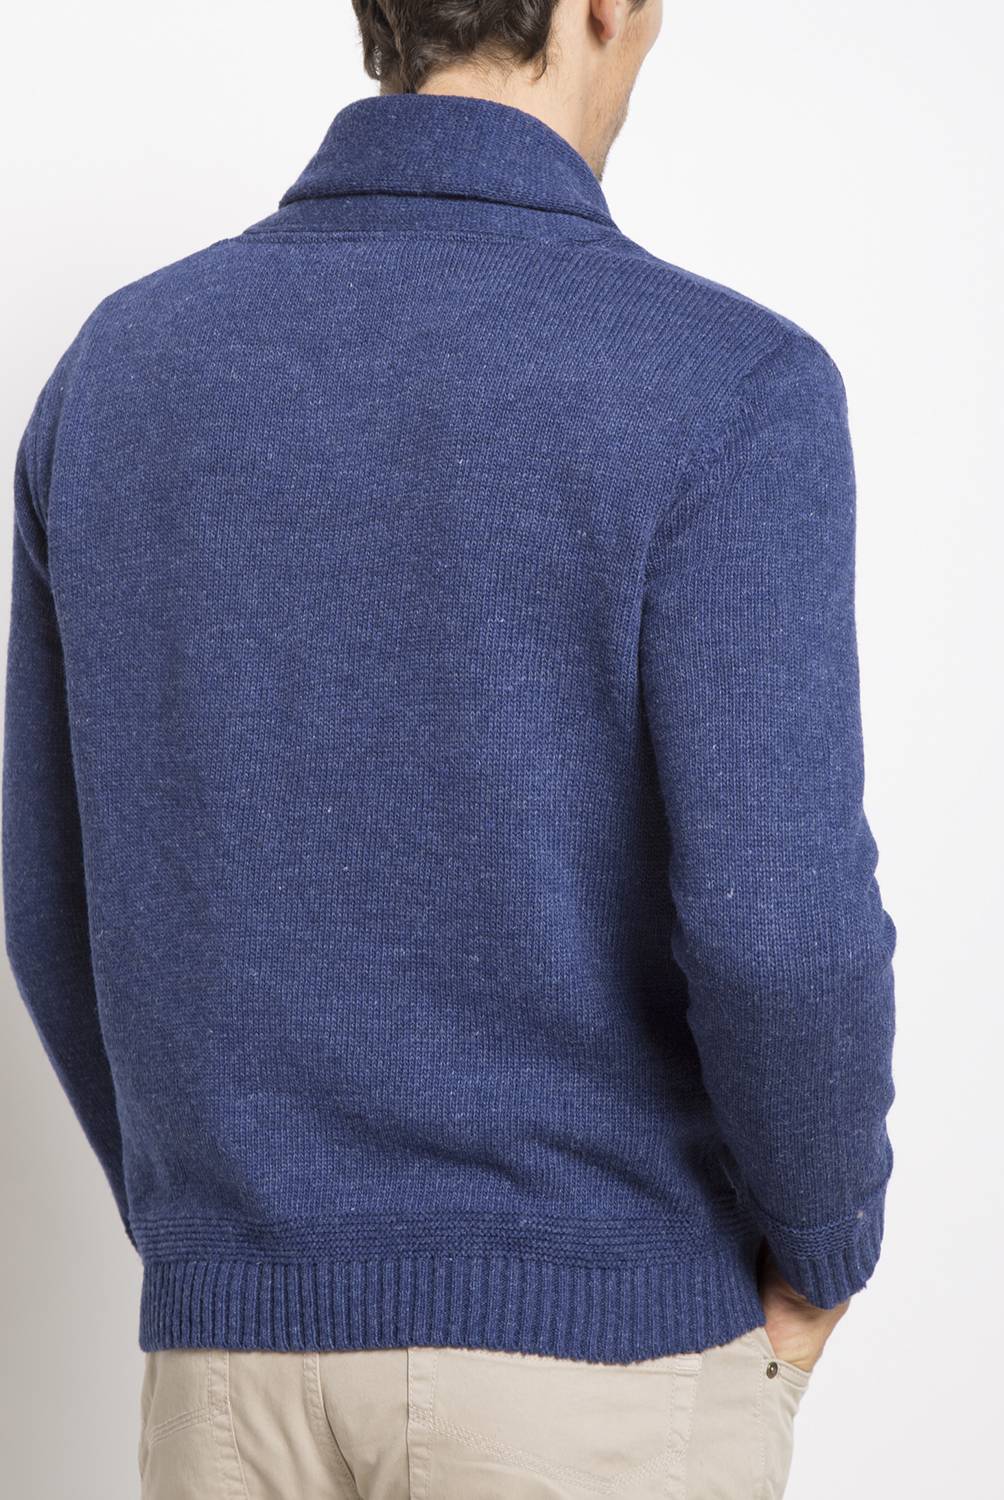 NEWPORT - Sweater Texturado